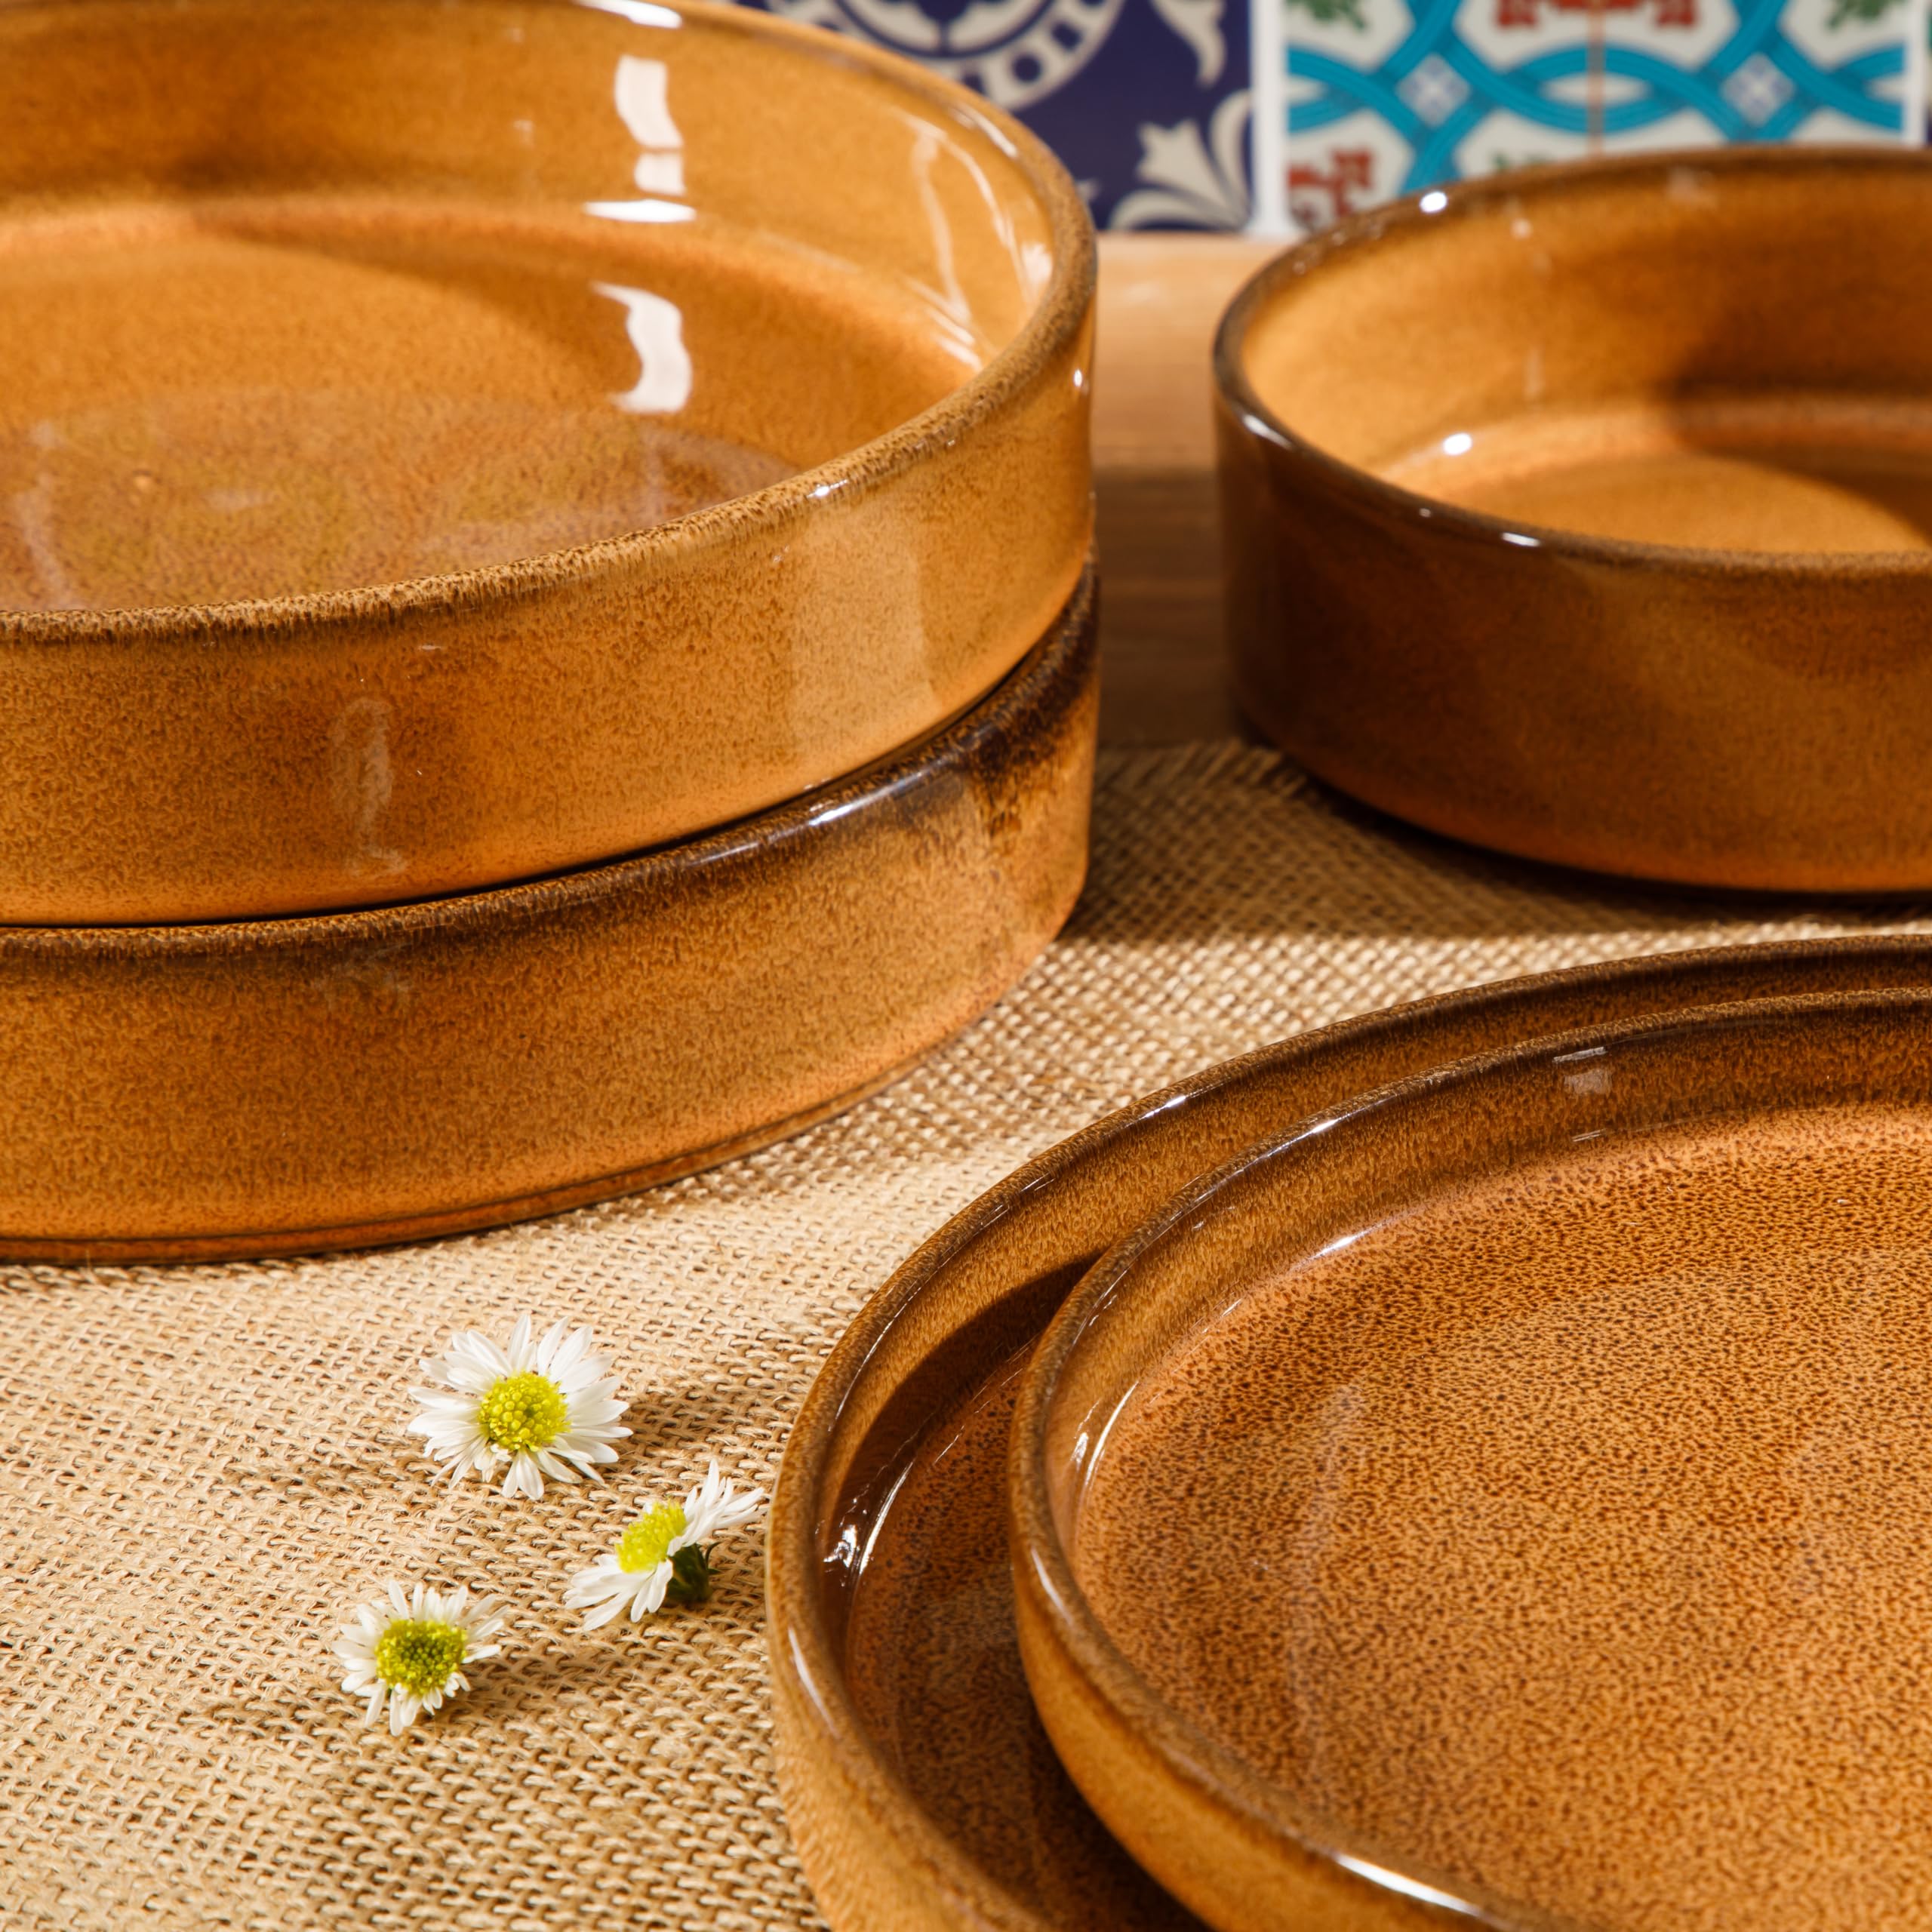 Bloomhouse - Oprah's Favorite Things - Santorini Mist Double Bowl Terracotta Reactive Glaze Plates and Bowls Dinnerware Set - Amber, Service for Four (16pcs)